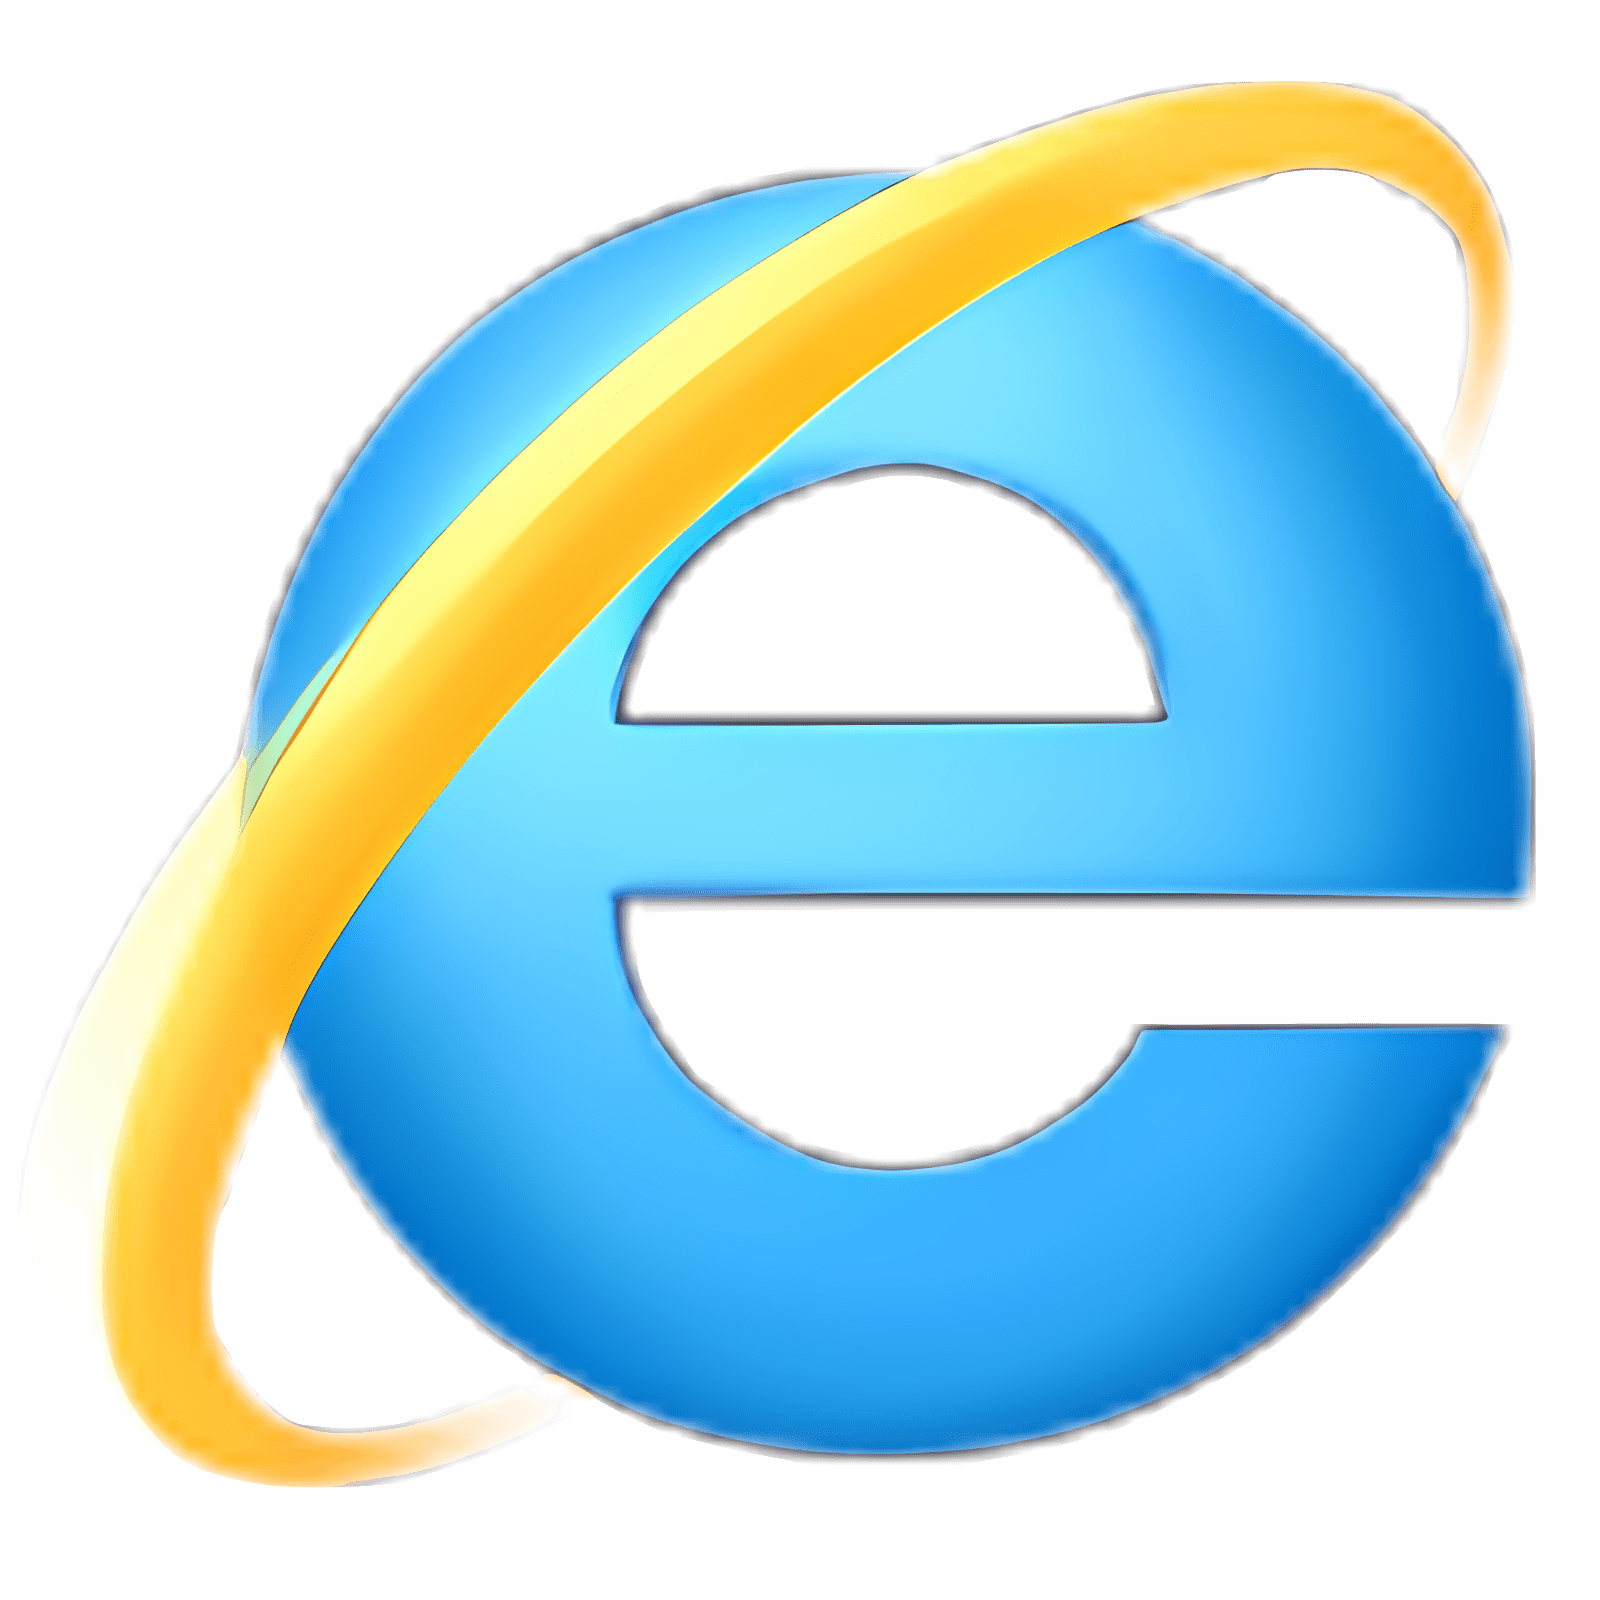 internet explorer 11 windows 7 32 bit free download